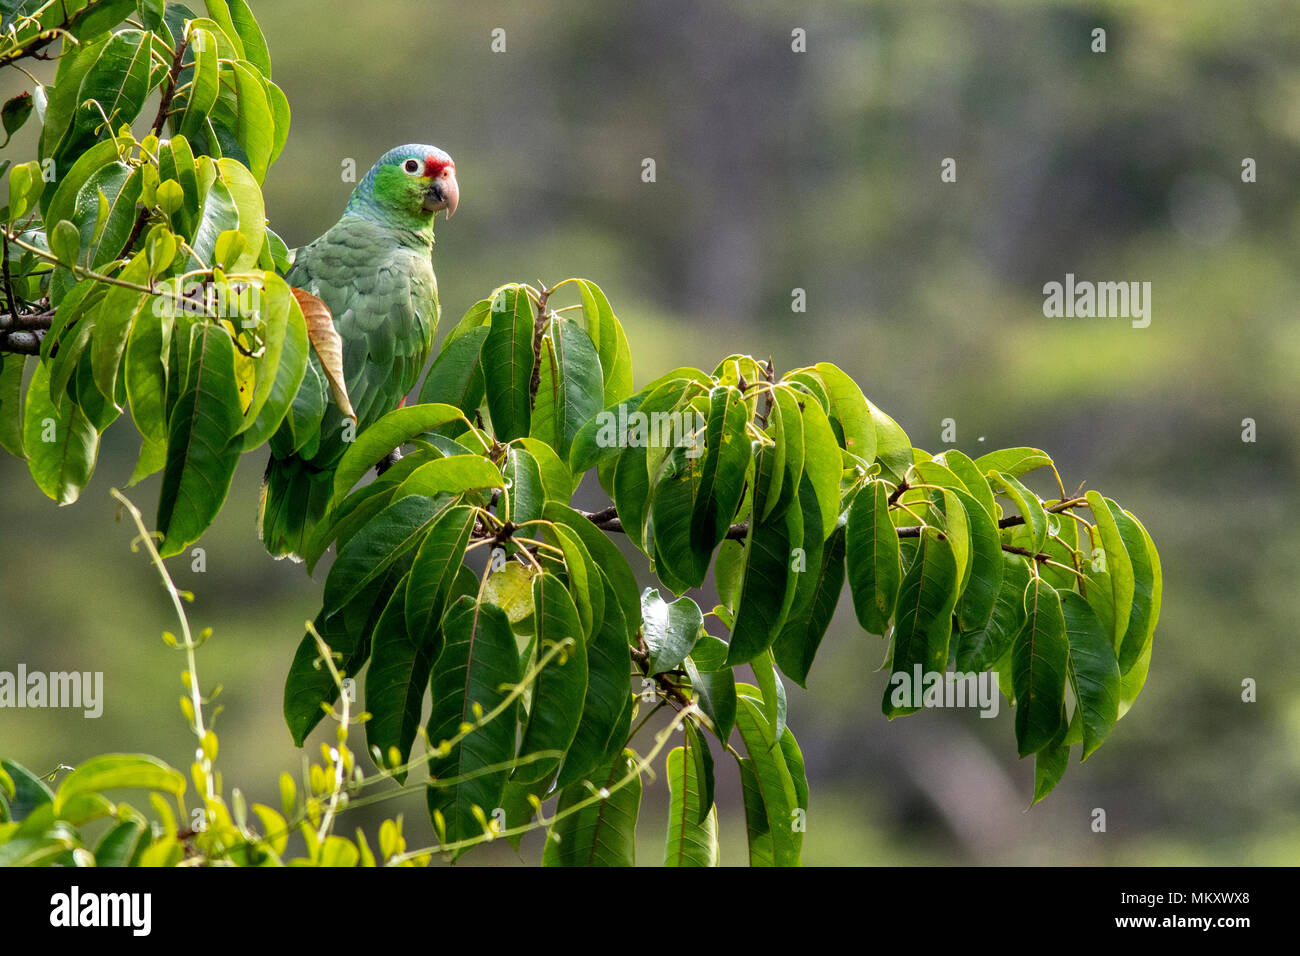 Amazonas Vögel Stockfotos und -bilder Kaufen - Alamy